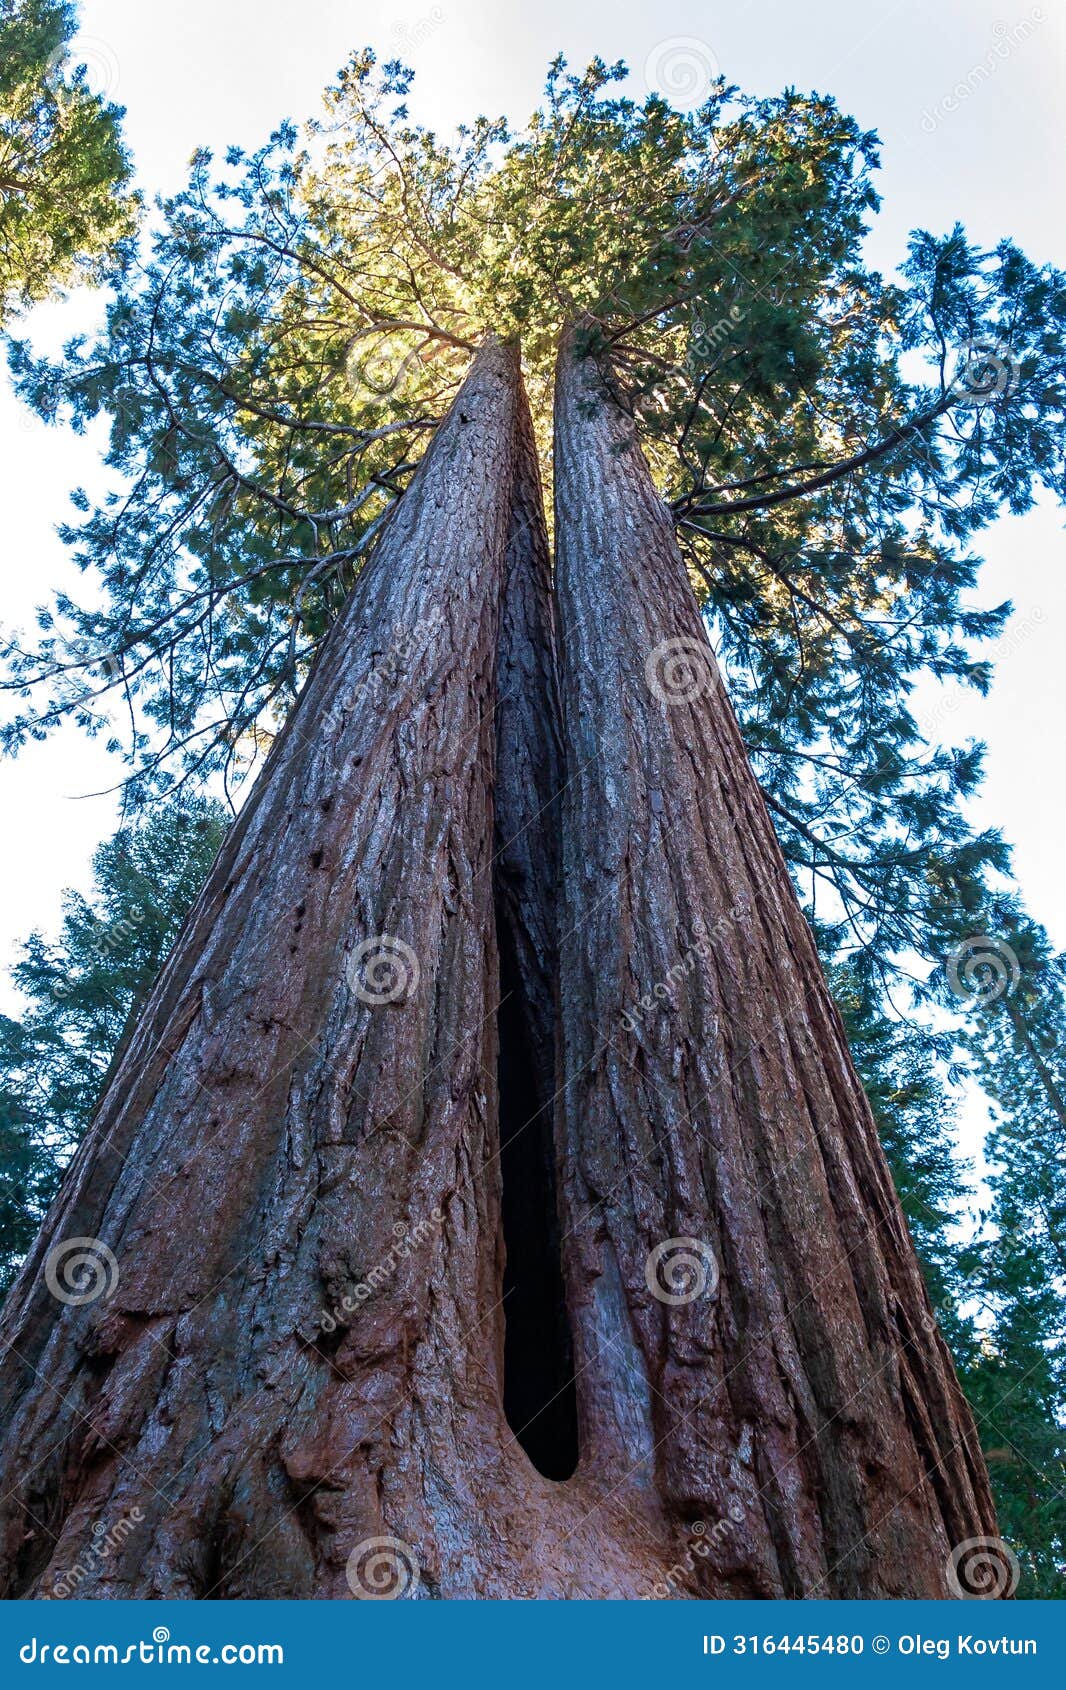 giant sequoia trees (sequoiadendron giganteum) in sequoia national park, california, usa